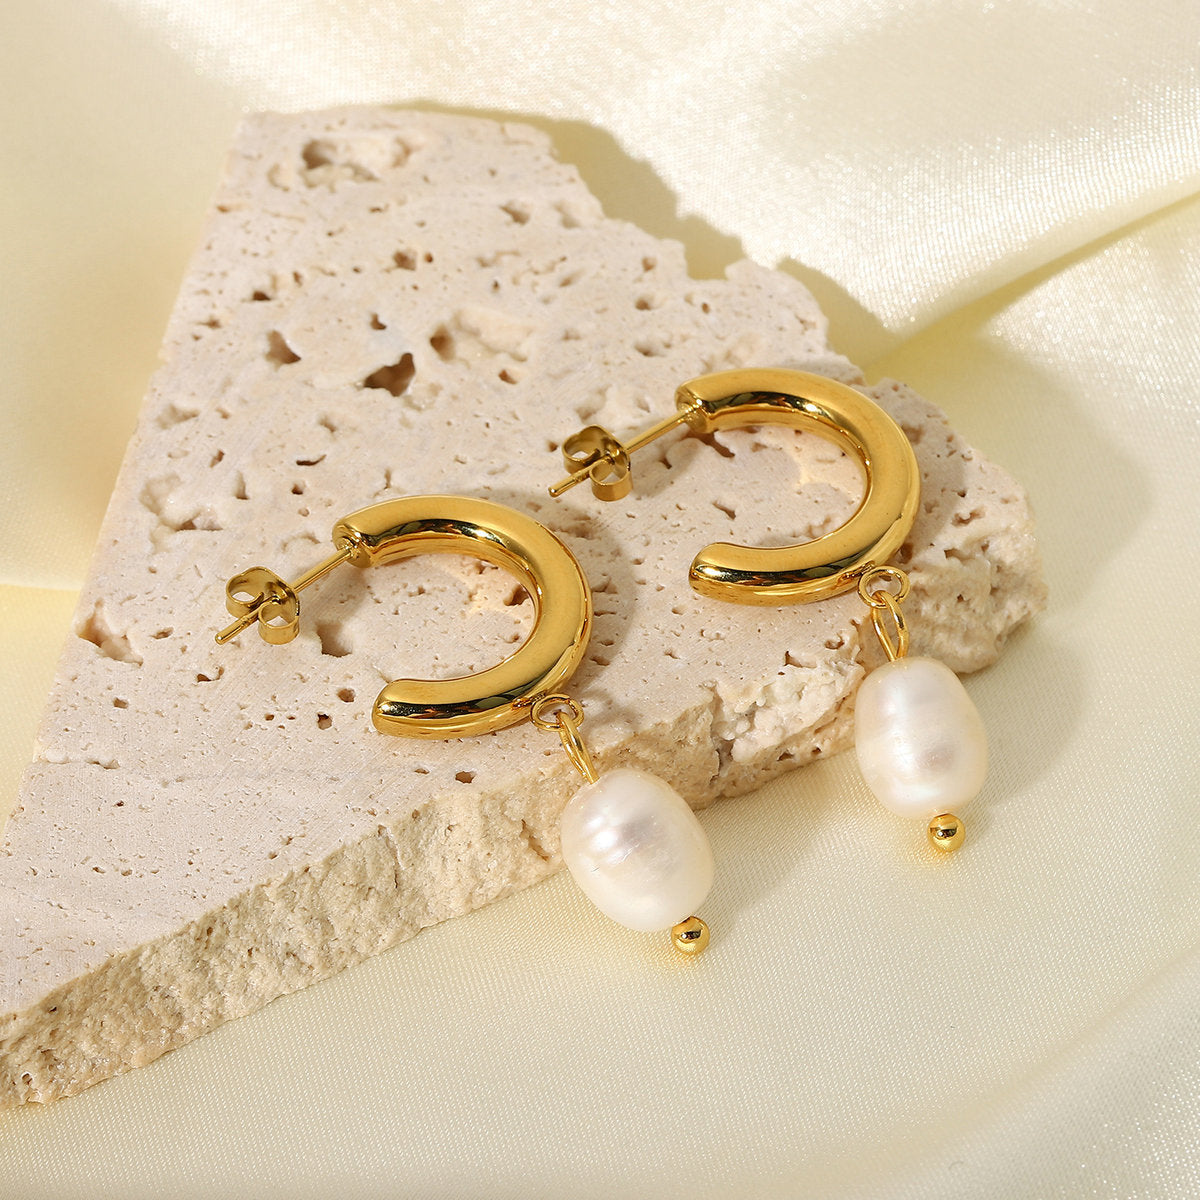 Fashion Pearl Hoop Earrings medyjewelry